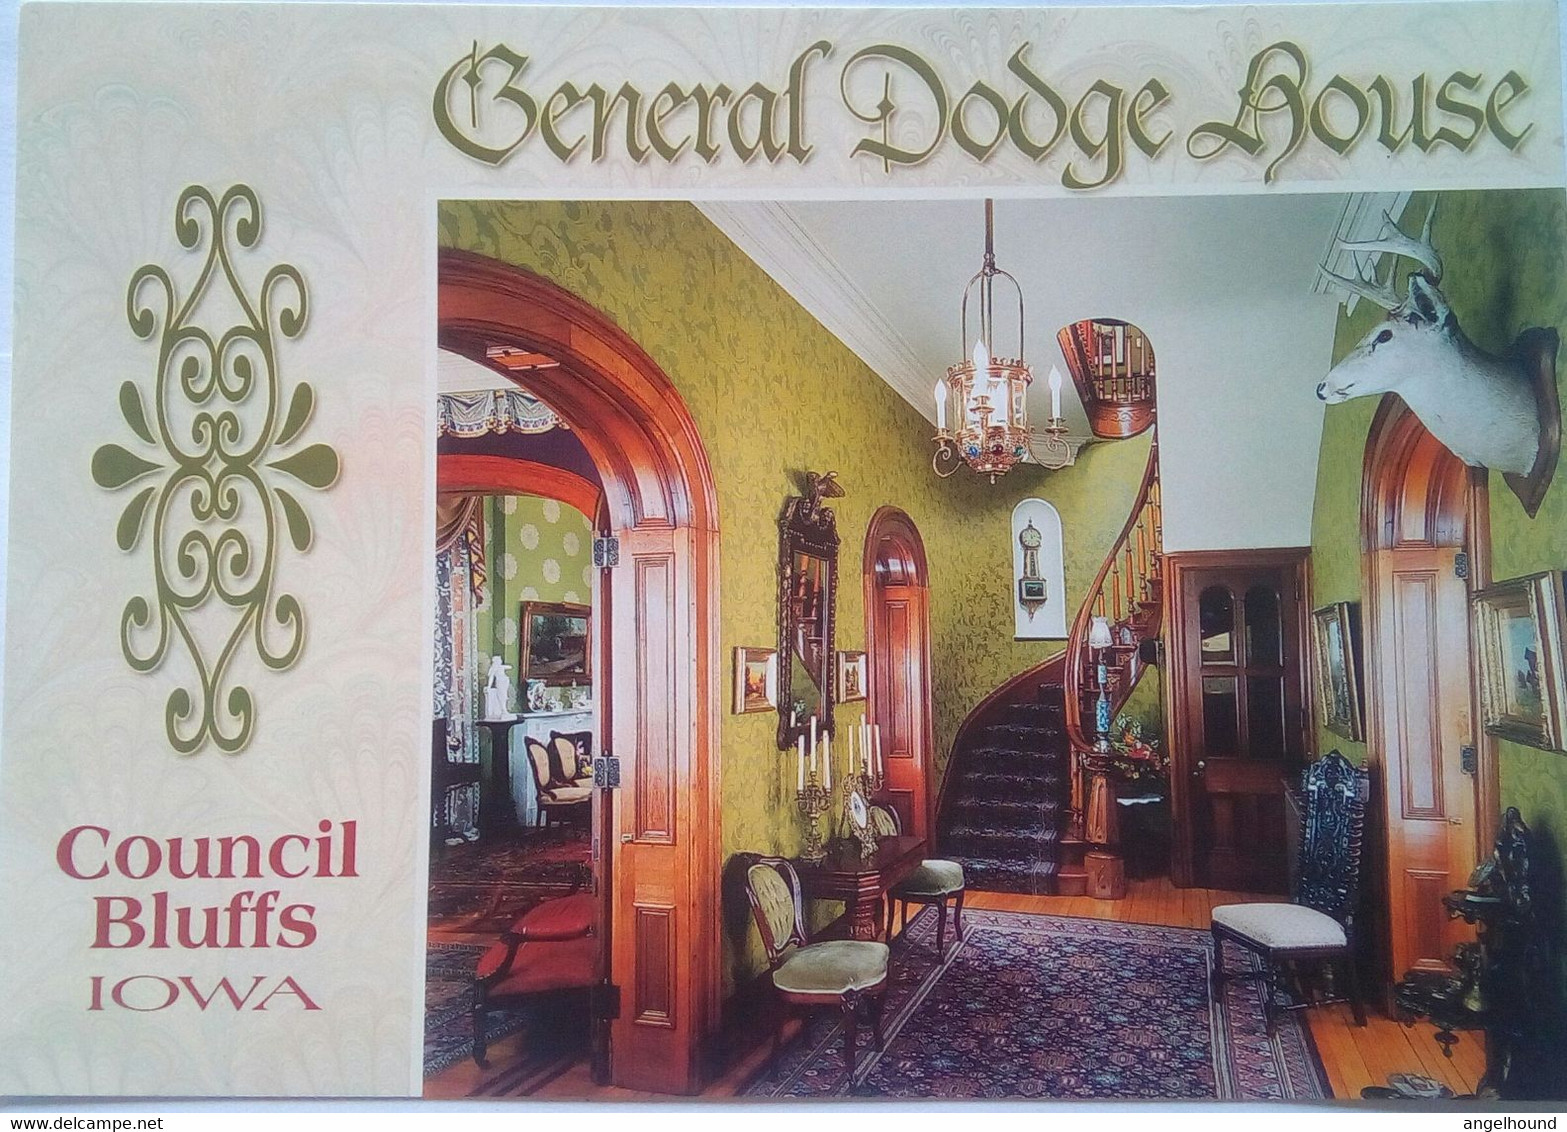 Gen. Dodge House Front Hall - Council Bluffs